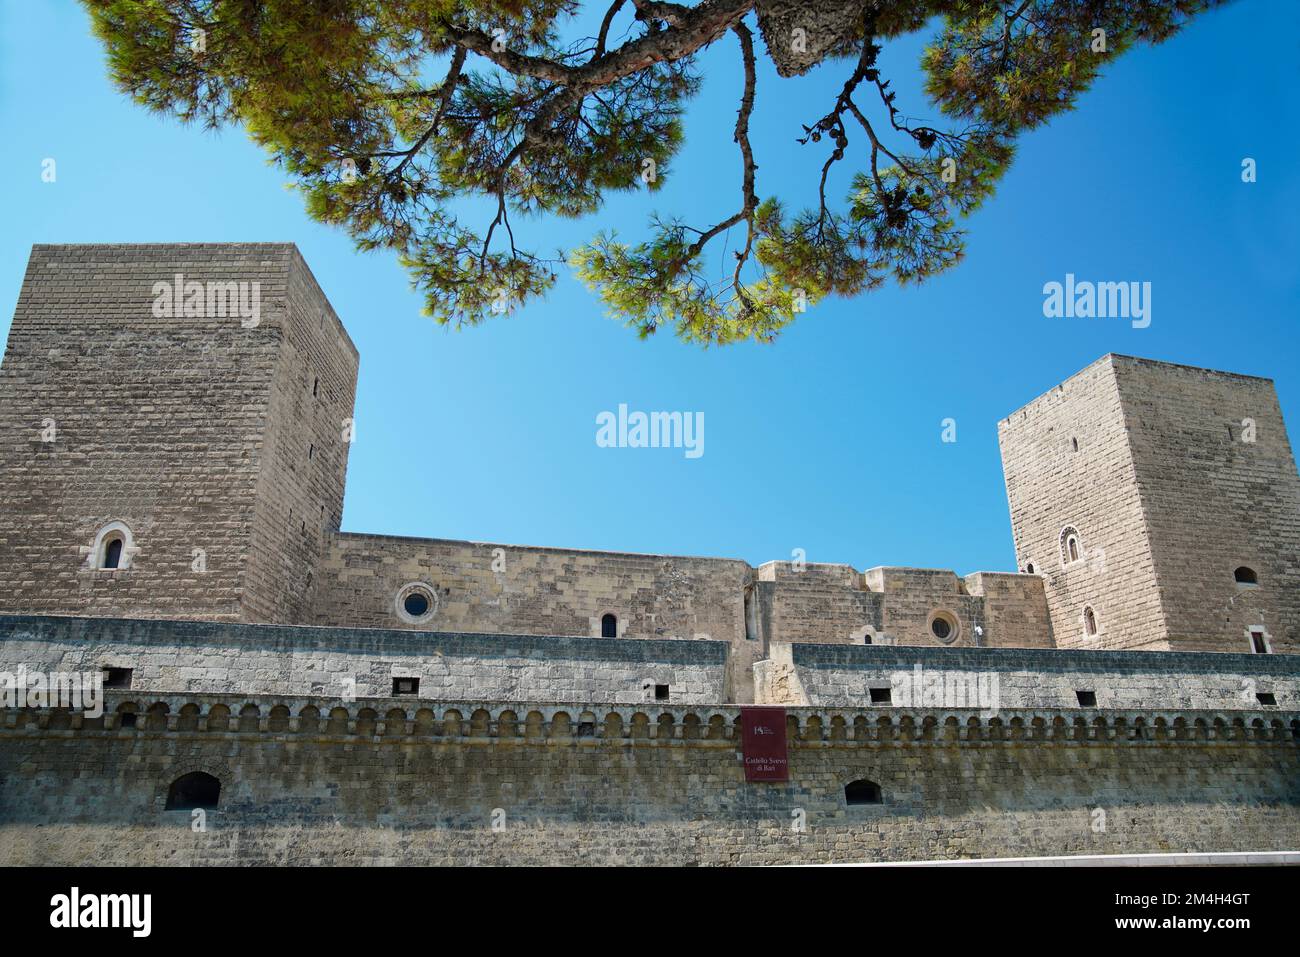 Castello Svevo, Bari, province of Bari, Region of Apulia, Italy Stock Photo